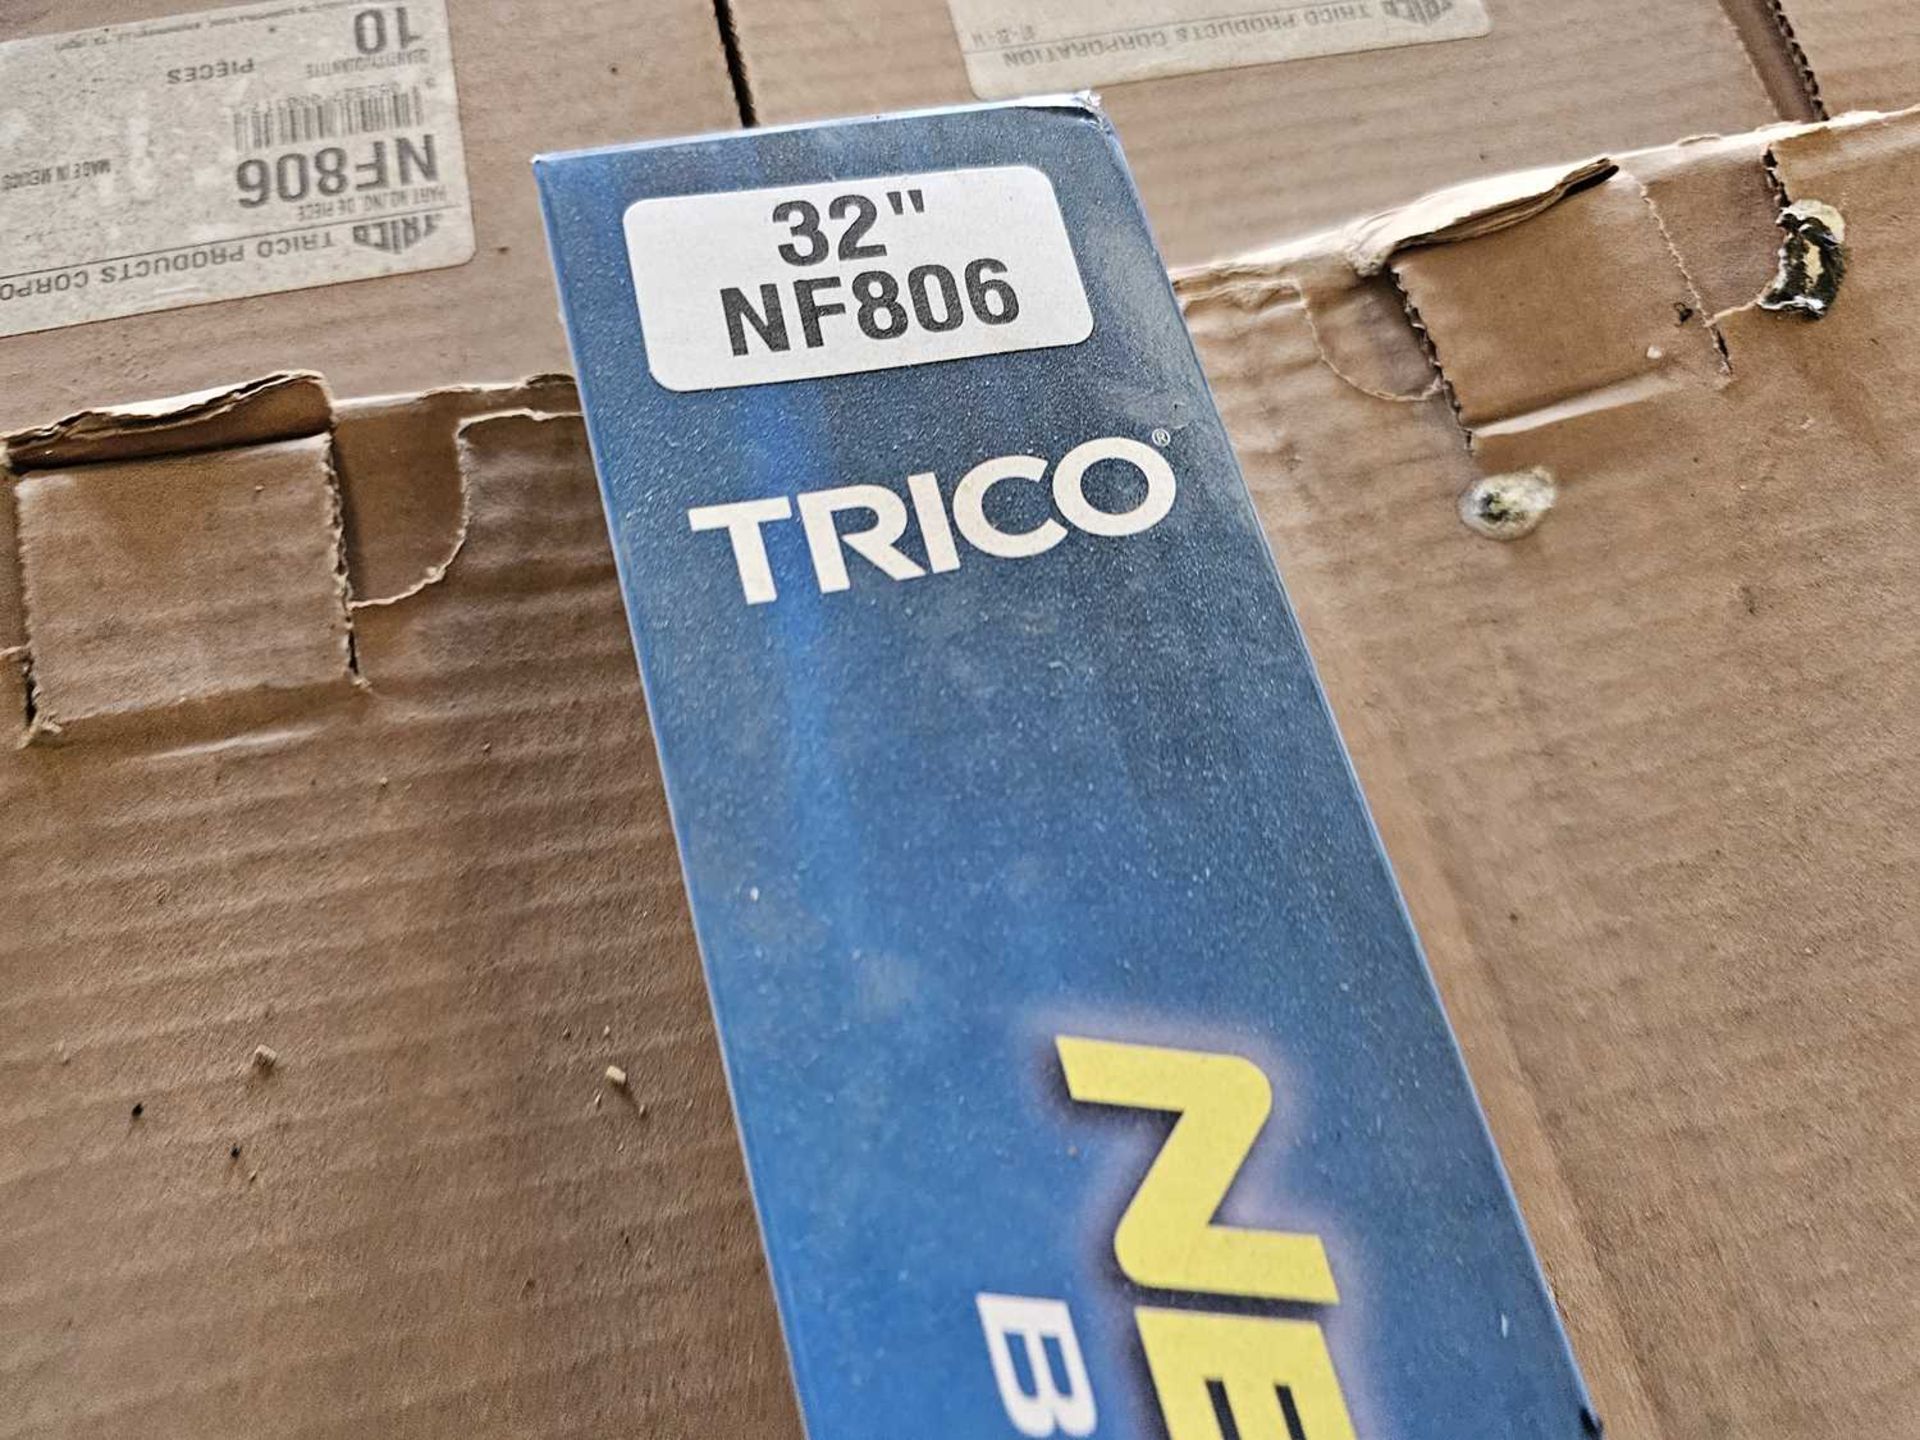 Unused Pallet of Trico NF806 Window Wiper (32") - Image 2 of 3